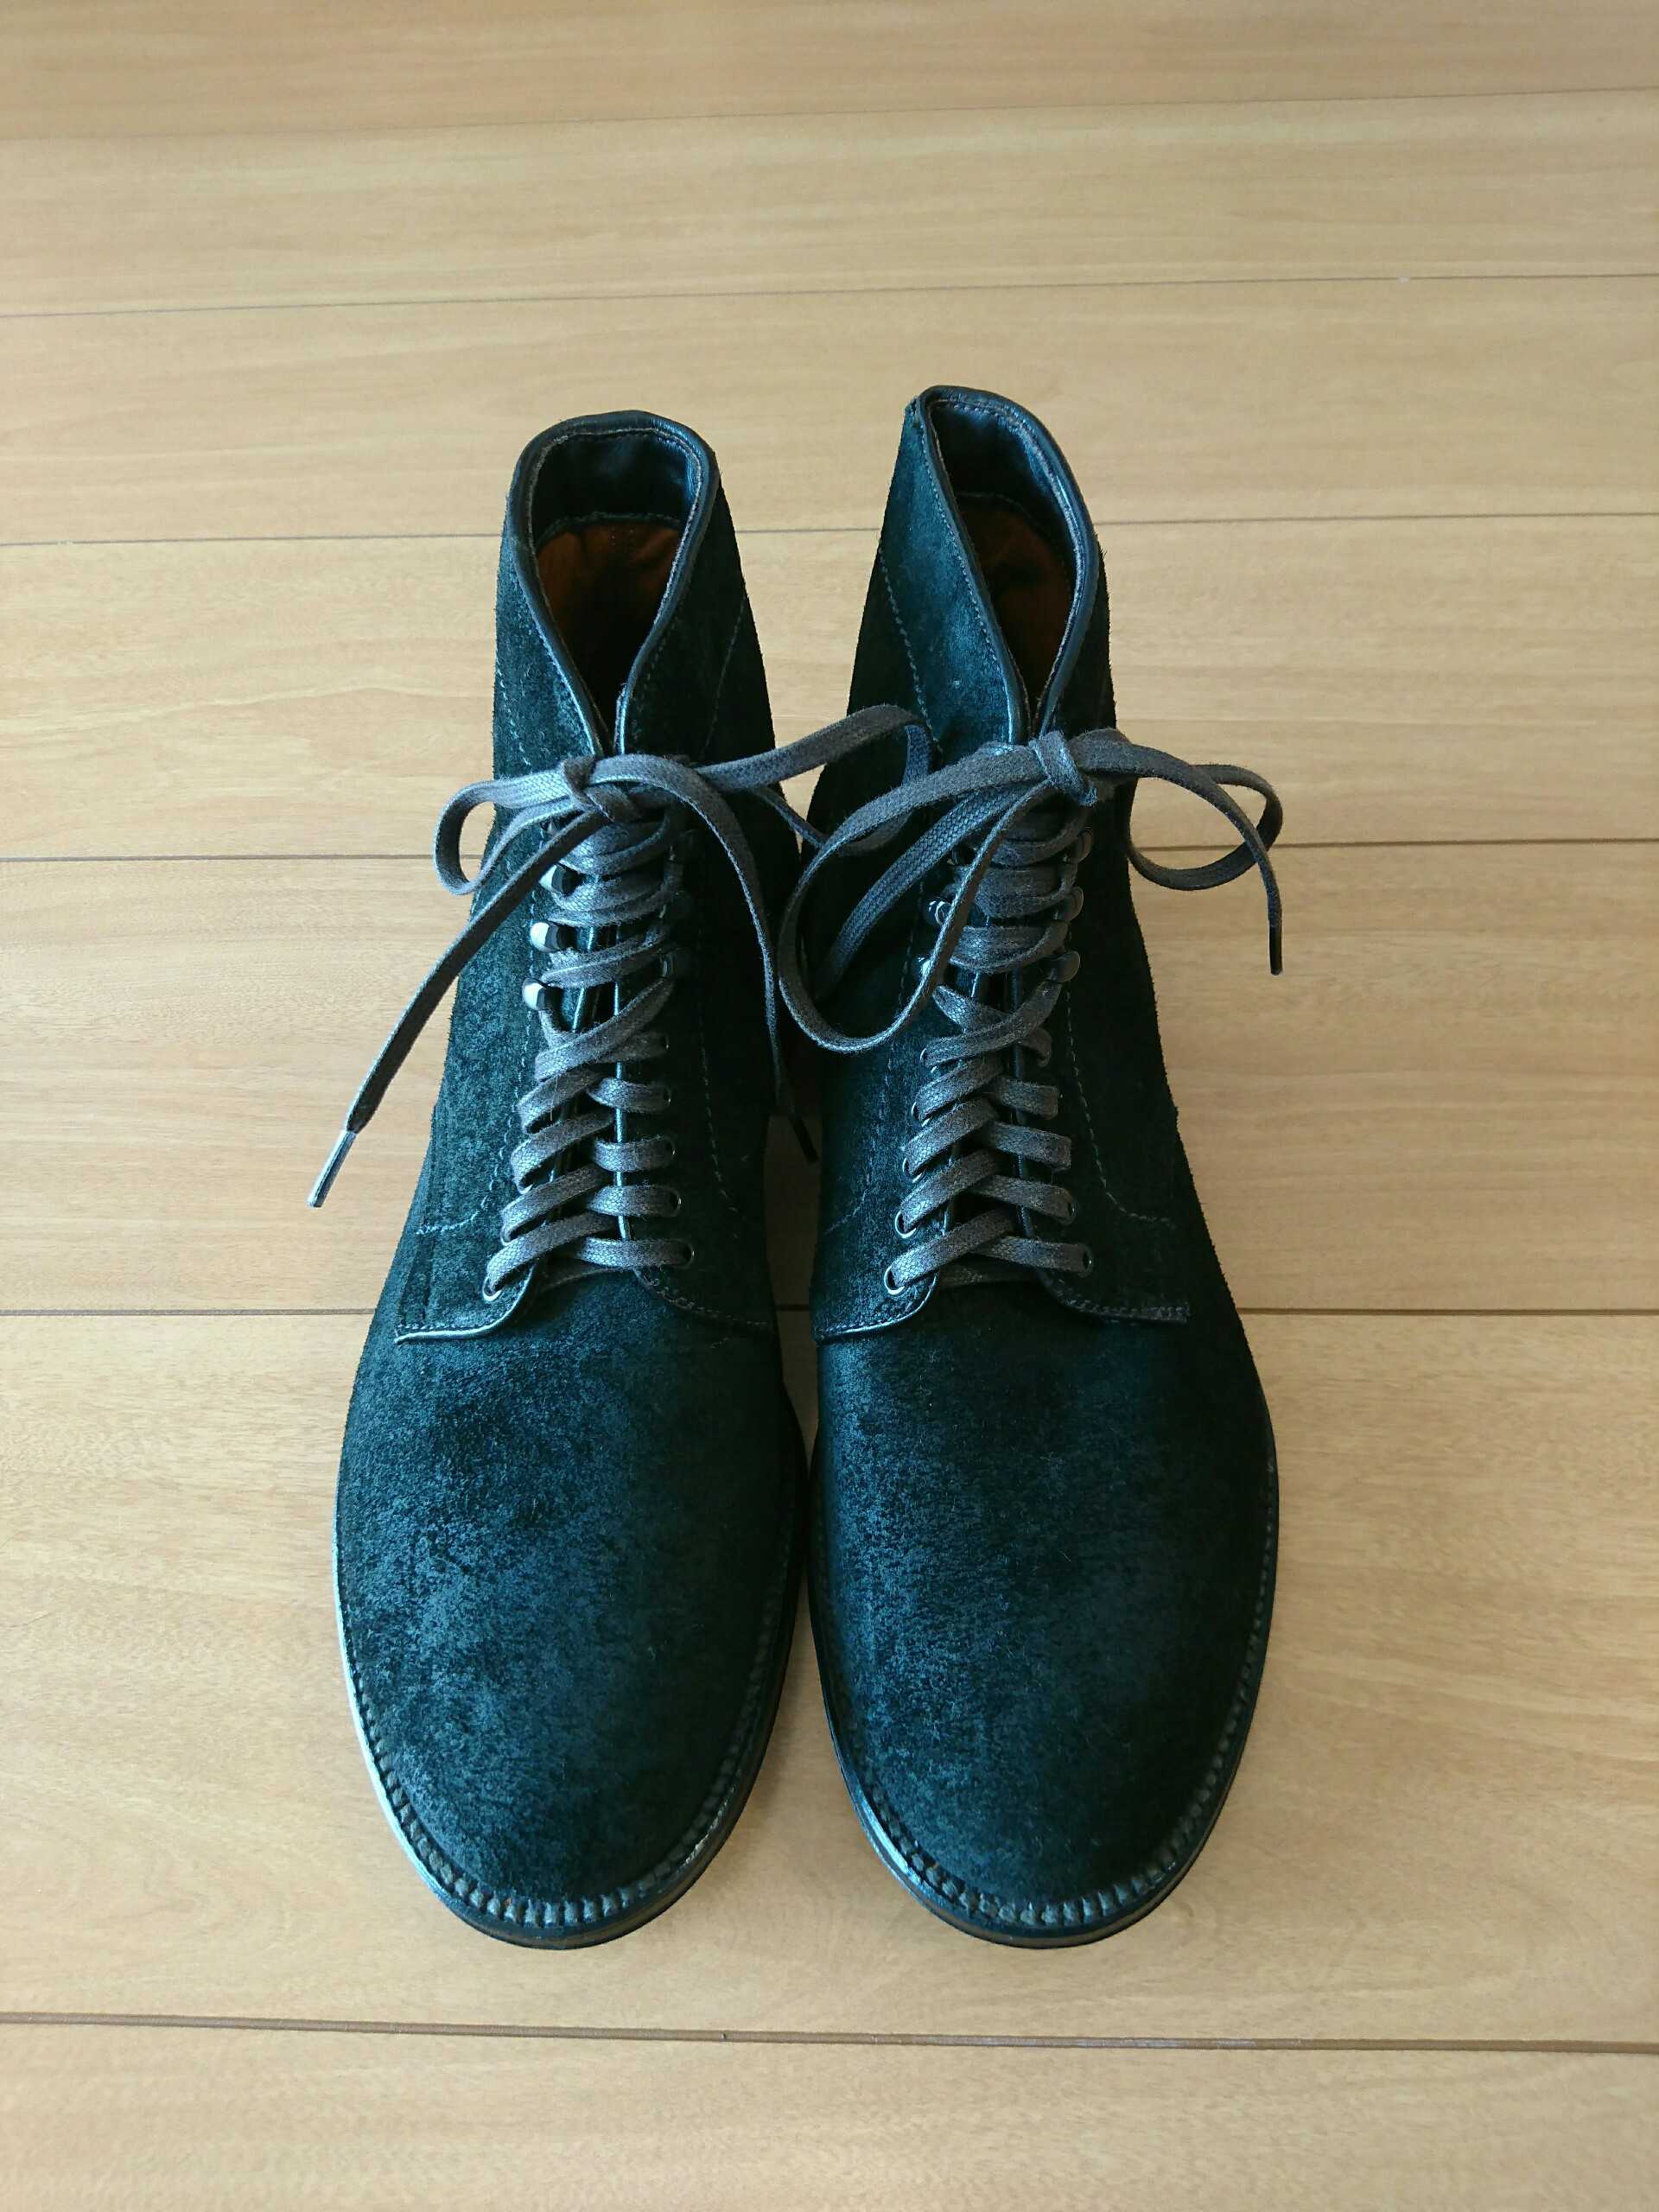 Alden N5805H | オッサンの靴 - 楽天ブログ